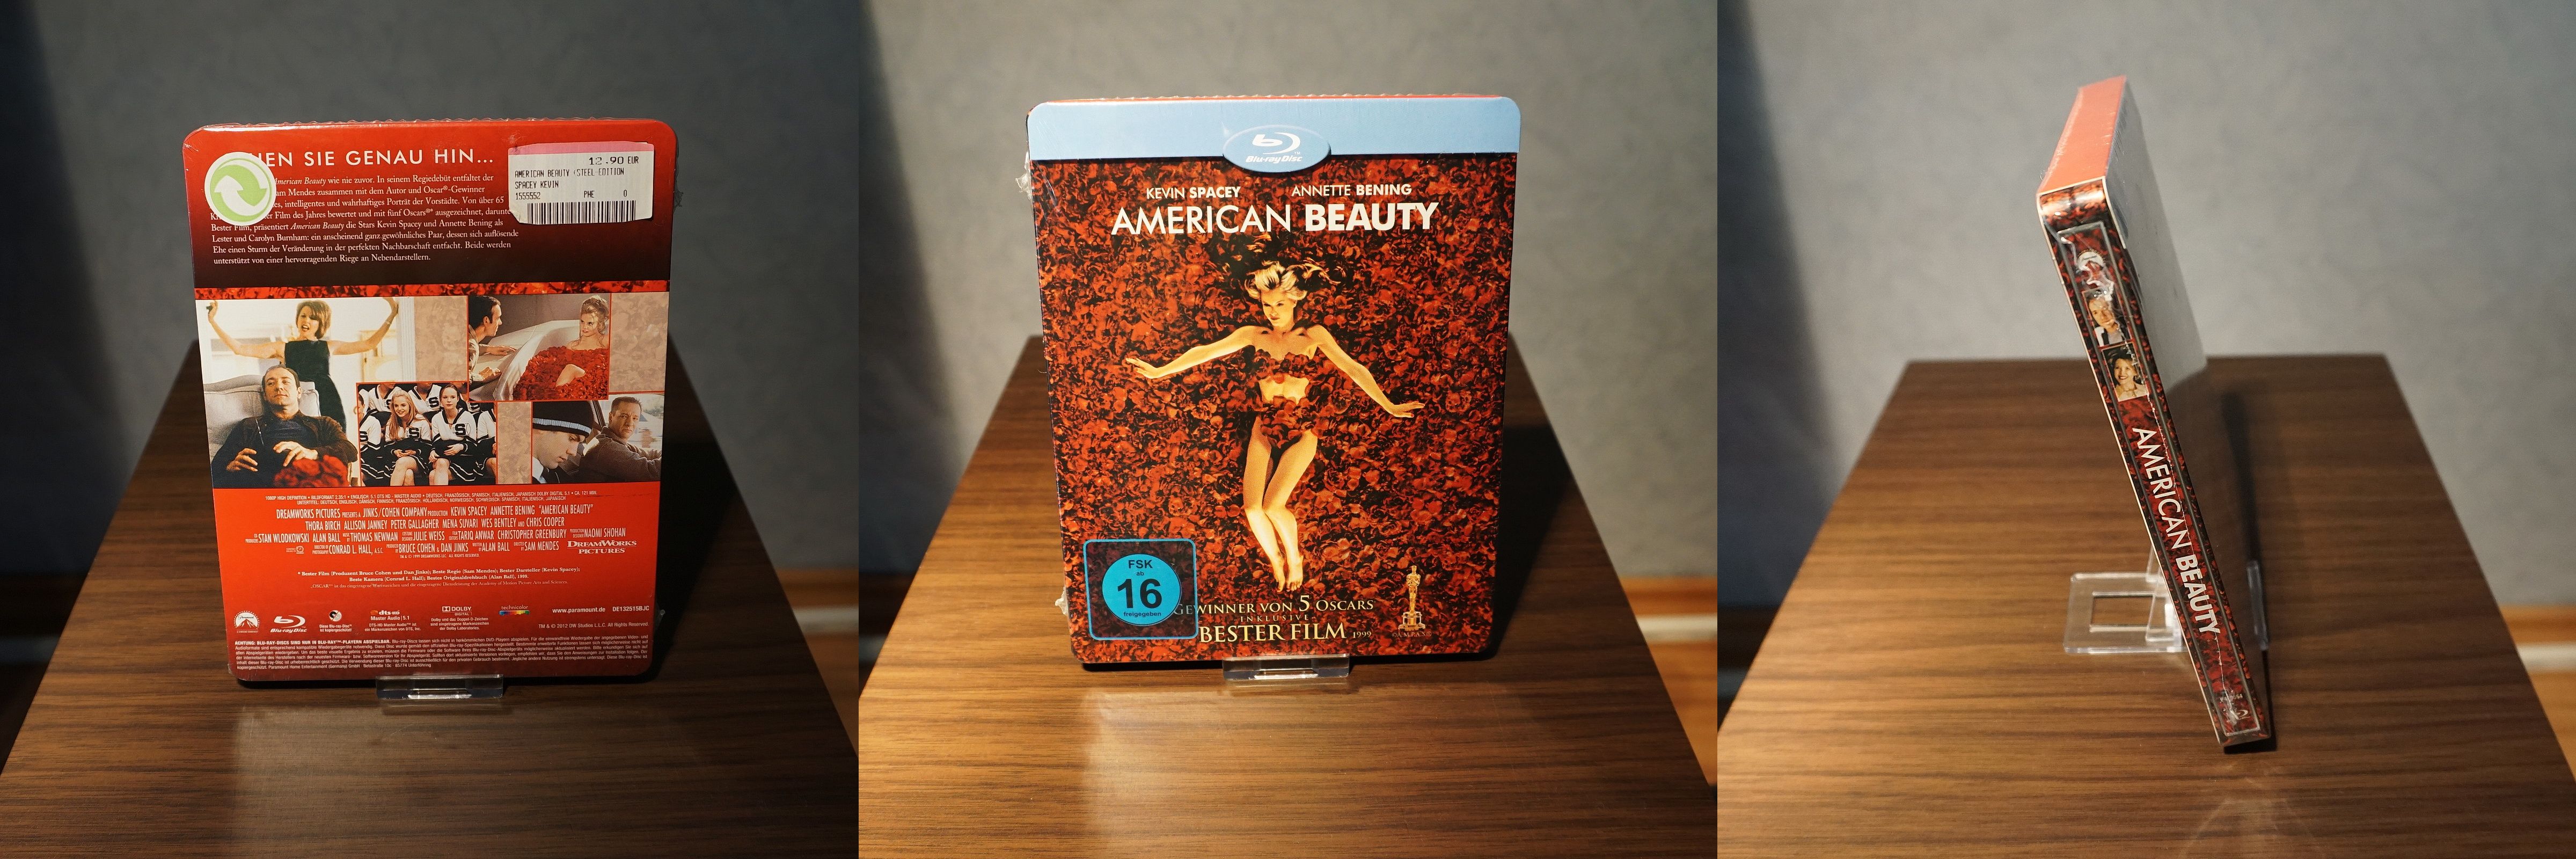 American Beauty Germany Media Markt